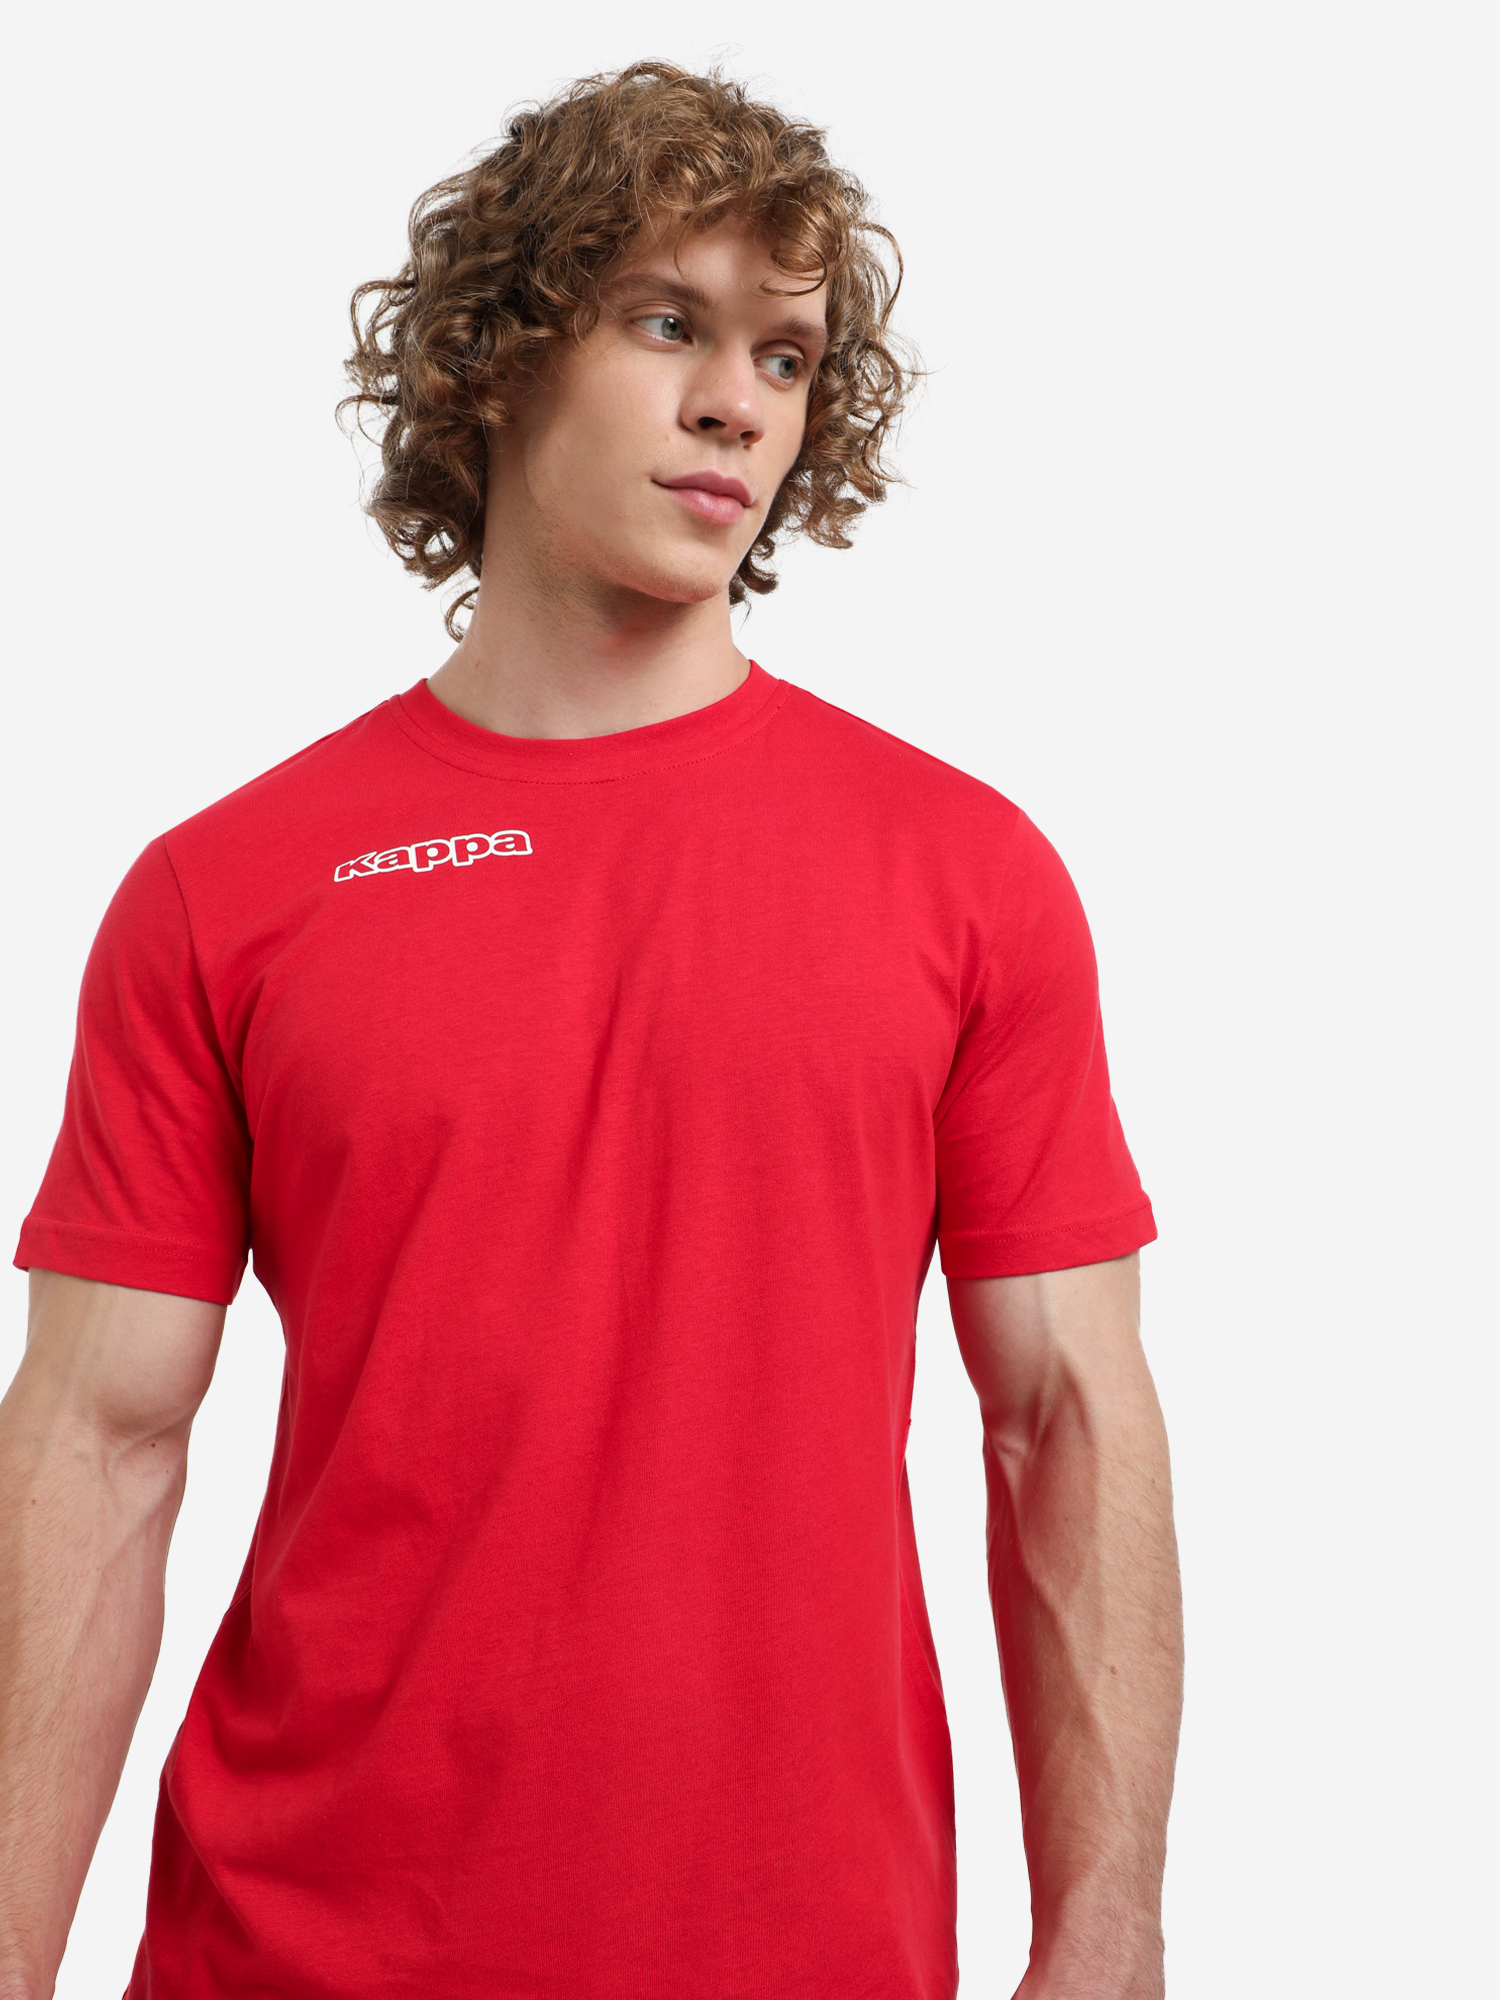 Футболка мужская Kappa, Красный футболка мужская lonsdale lubcroy красный